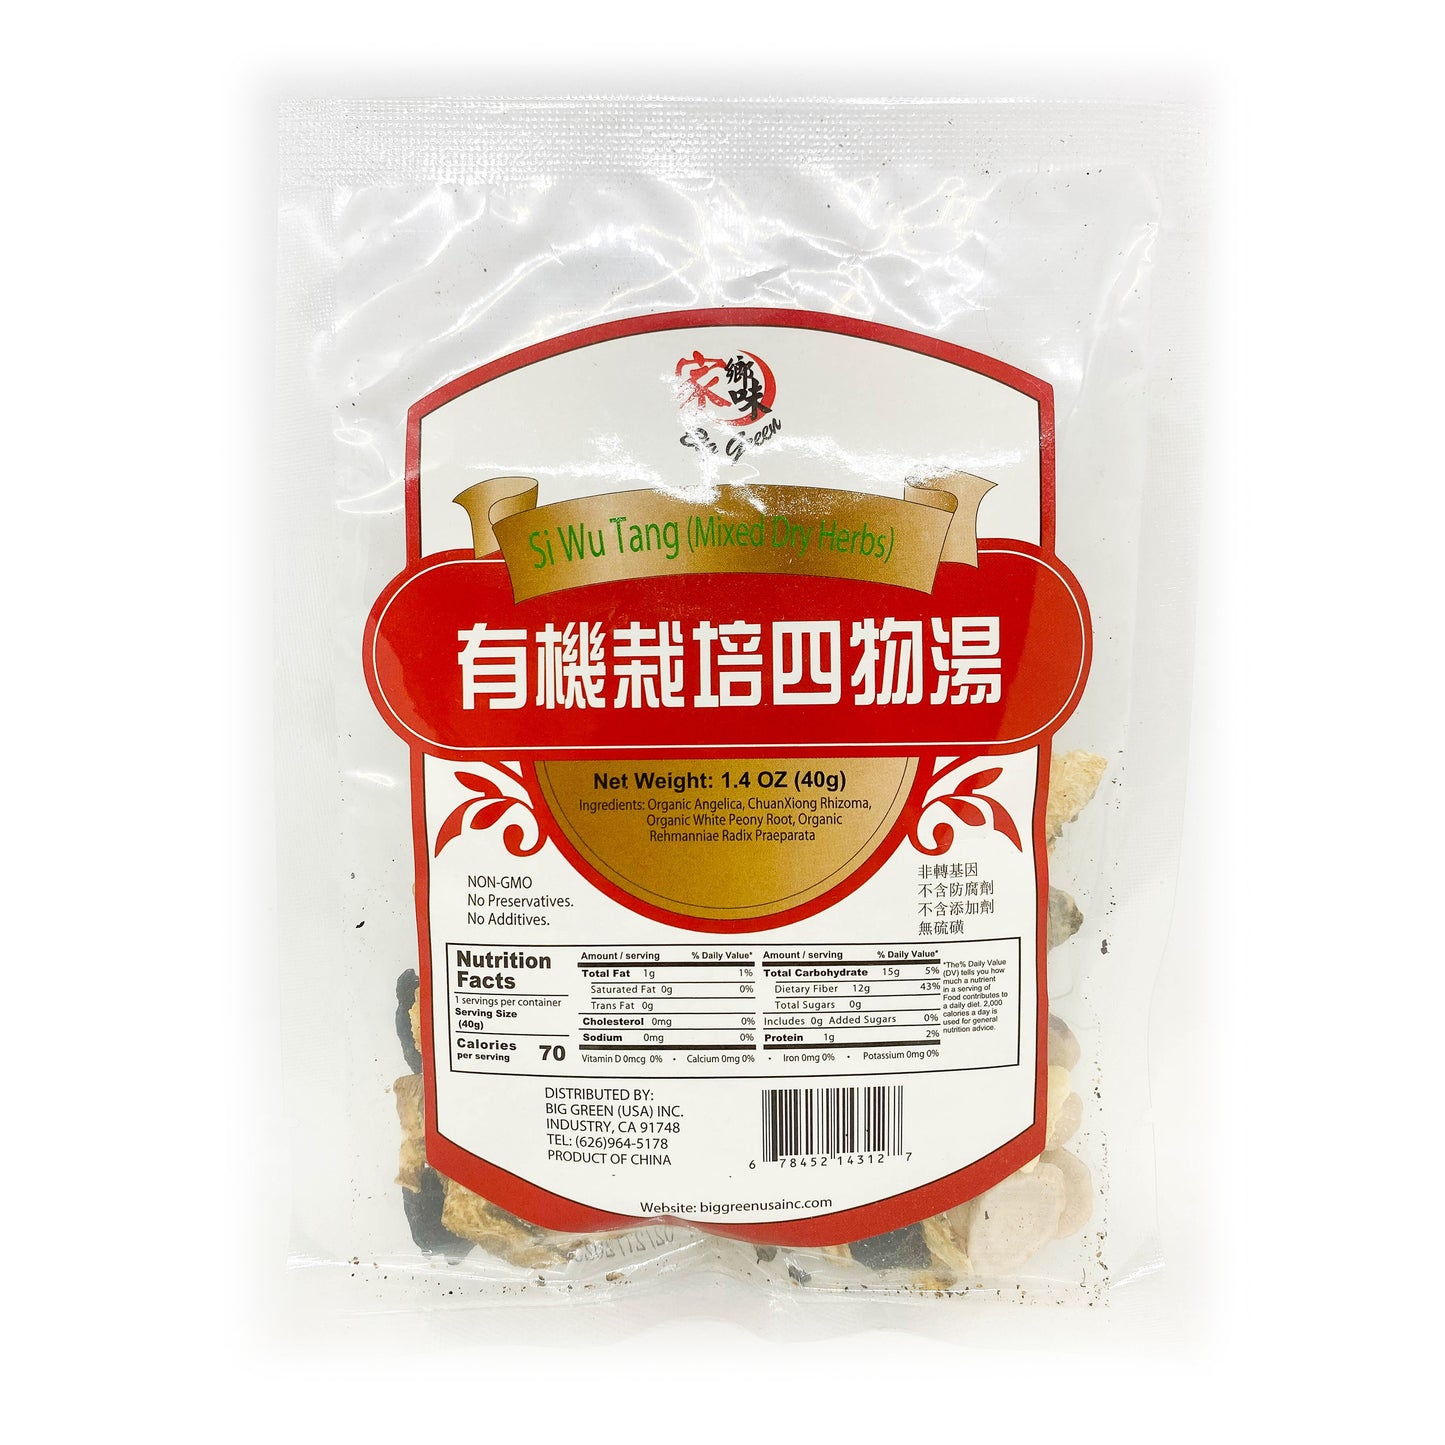 Si Wu Tang (Mixed Dry Herbs) 家鄉味 有機栽培四物湯